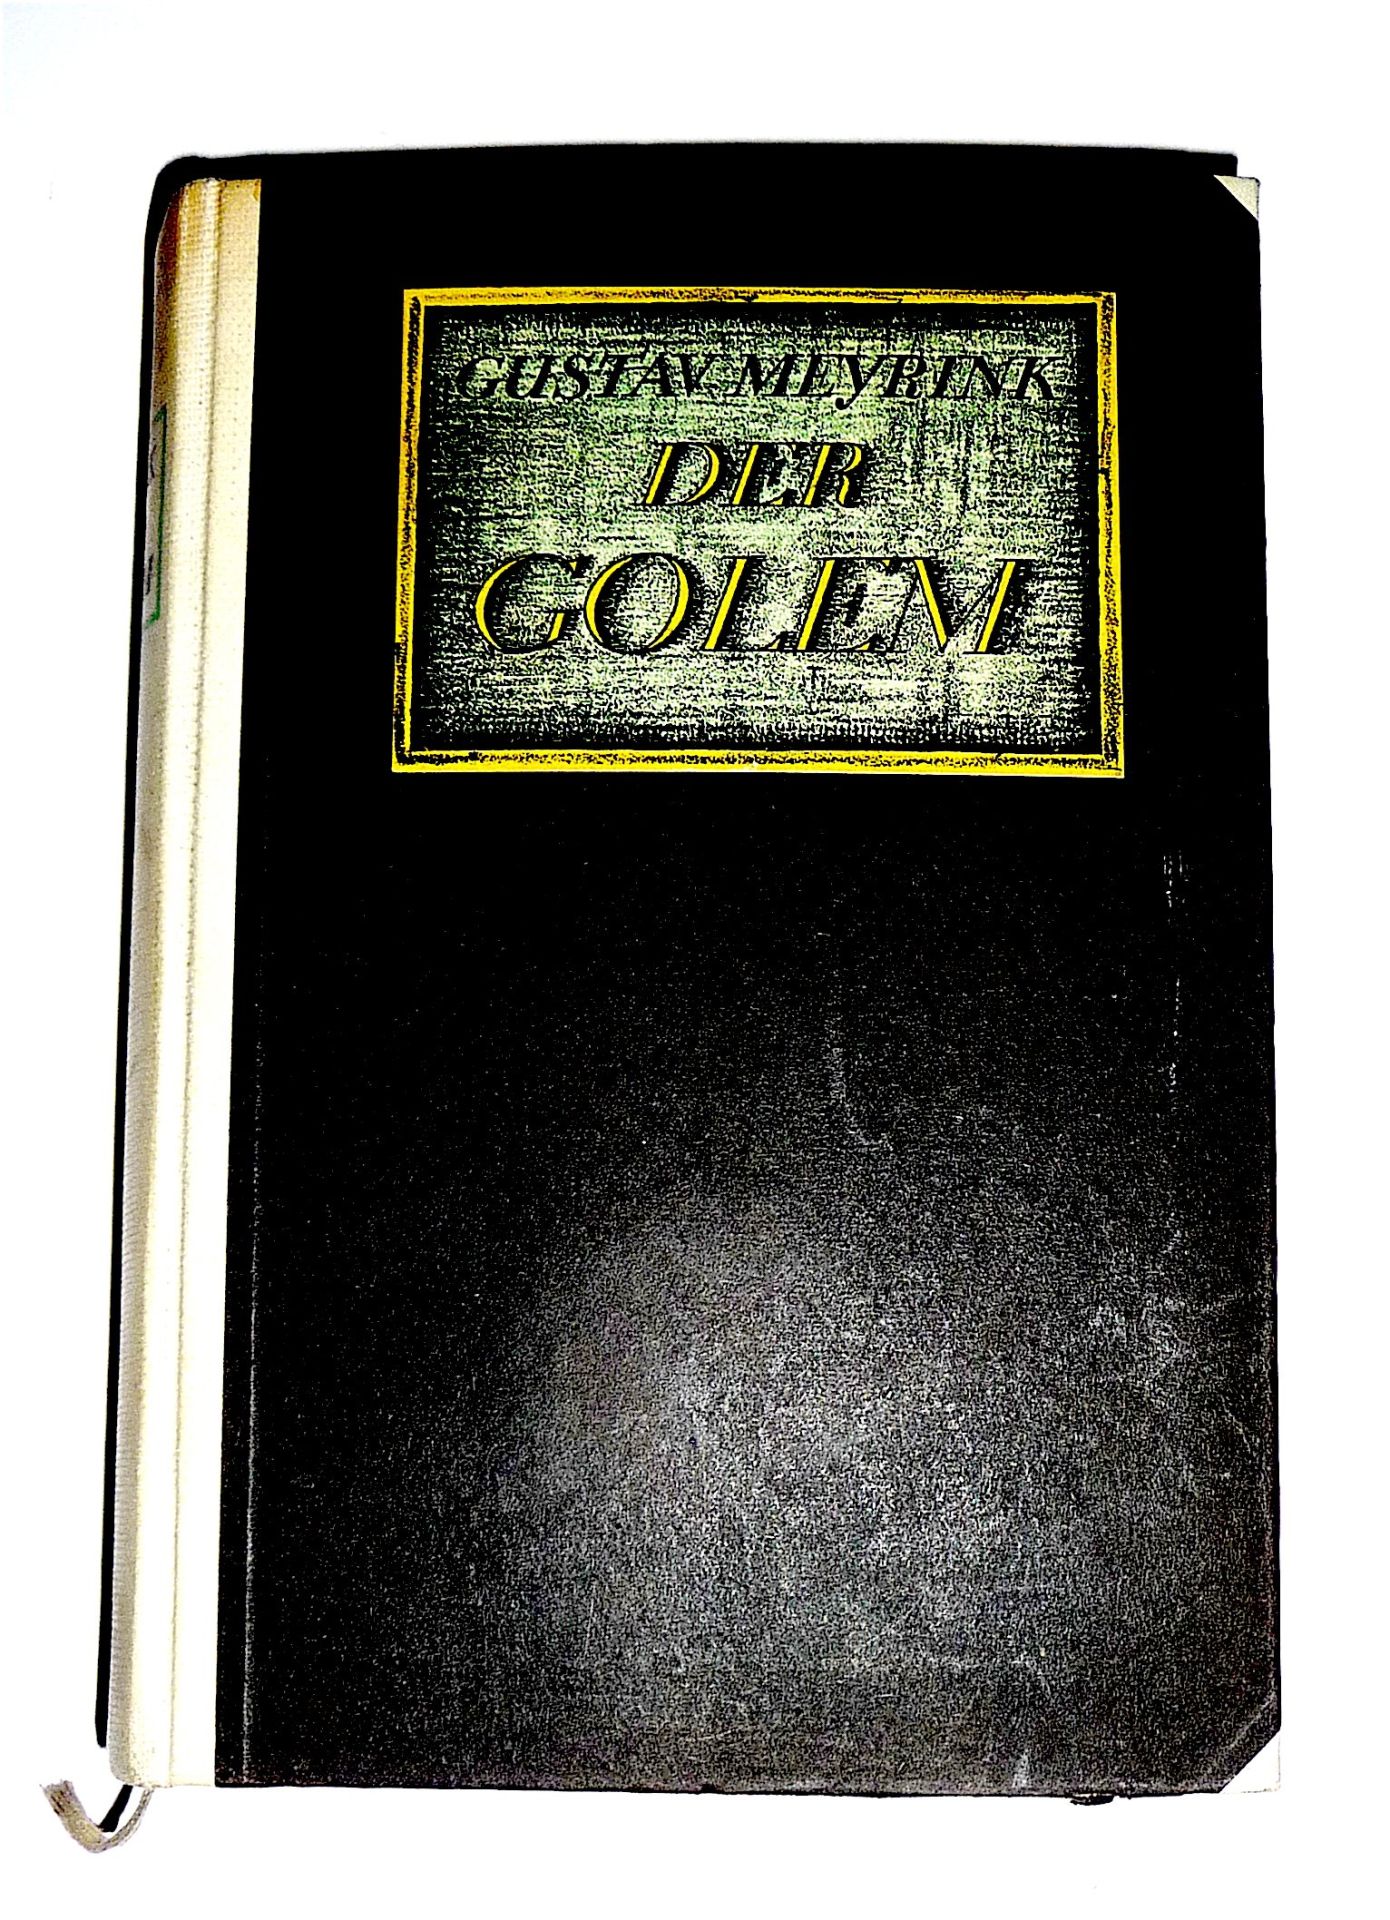 Der Golem, Roman - Meyrink, Gustav [= eig. Gustav Meyer].